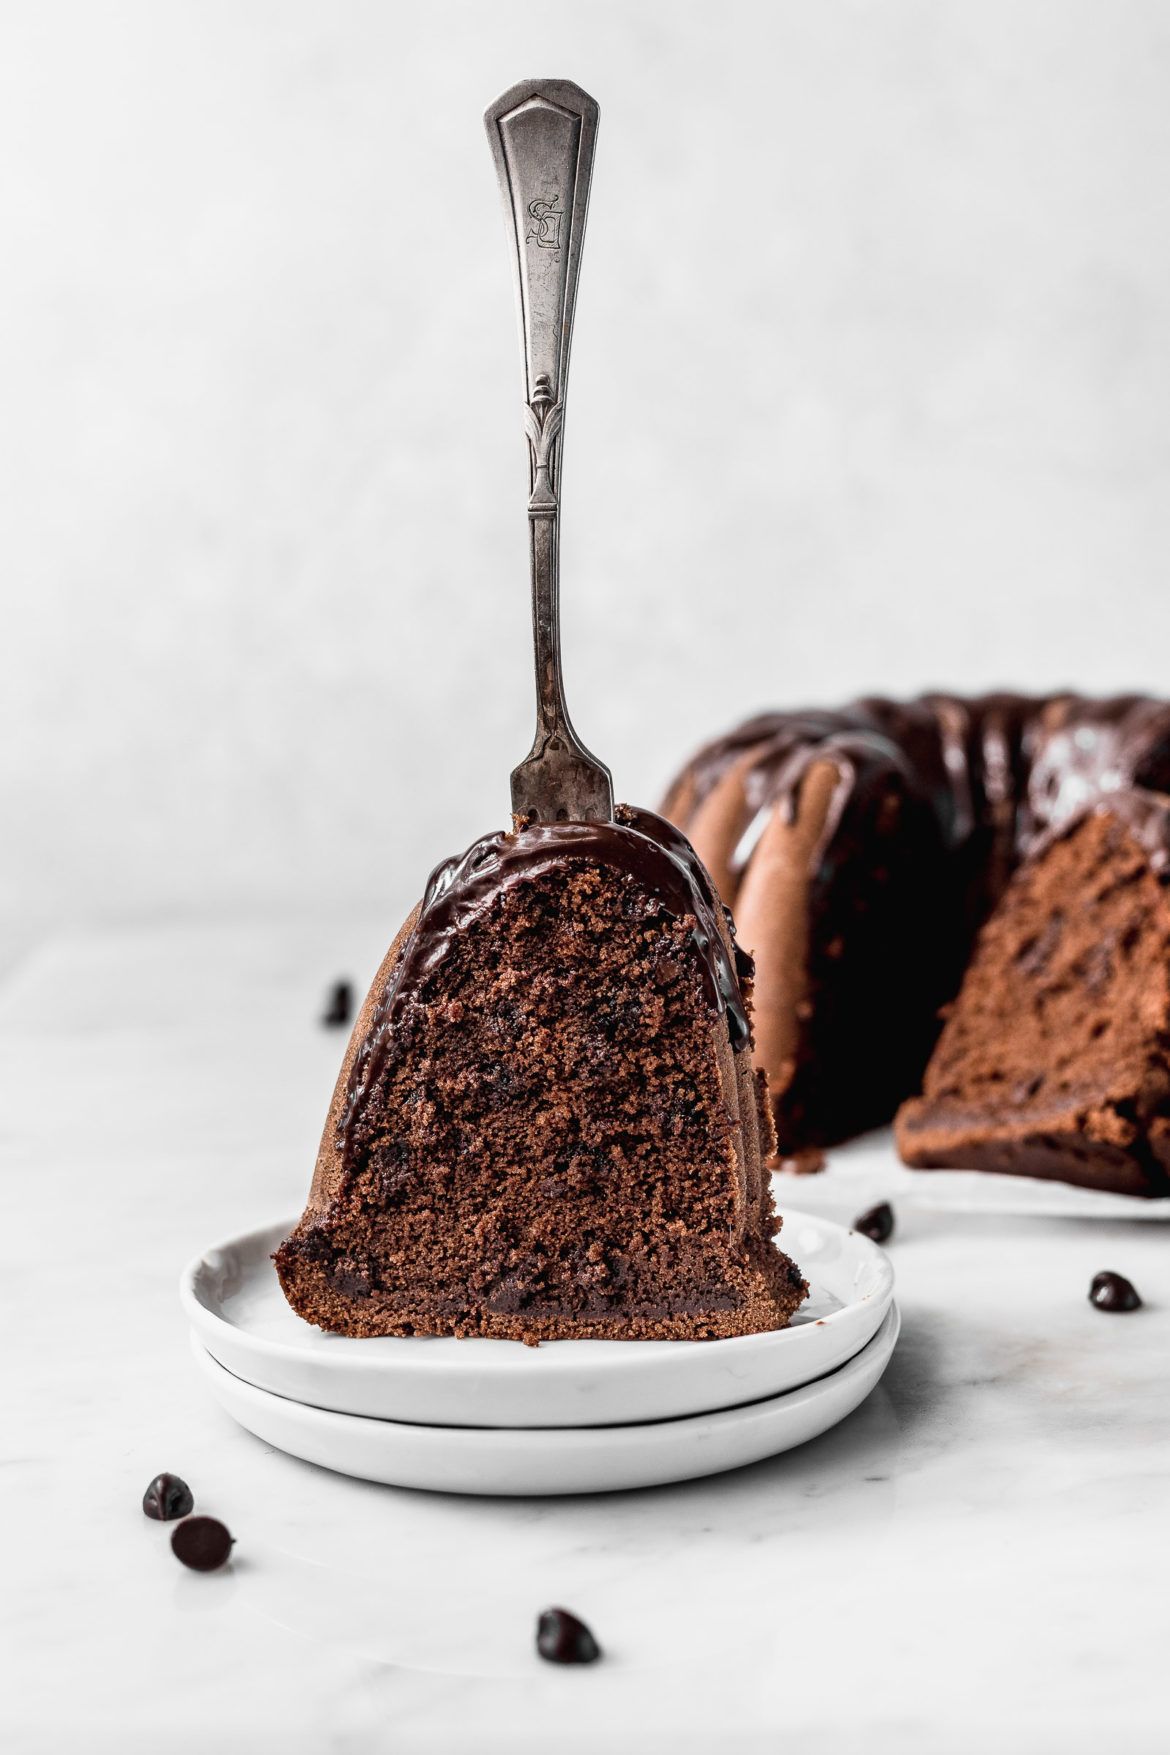 Chocolate Bundt Cake | Cravings Journal -   17 desserts Photography heavens ideas